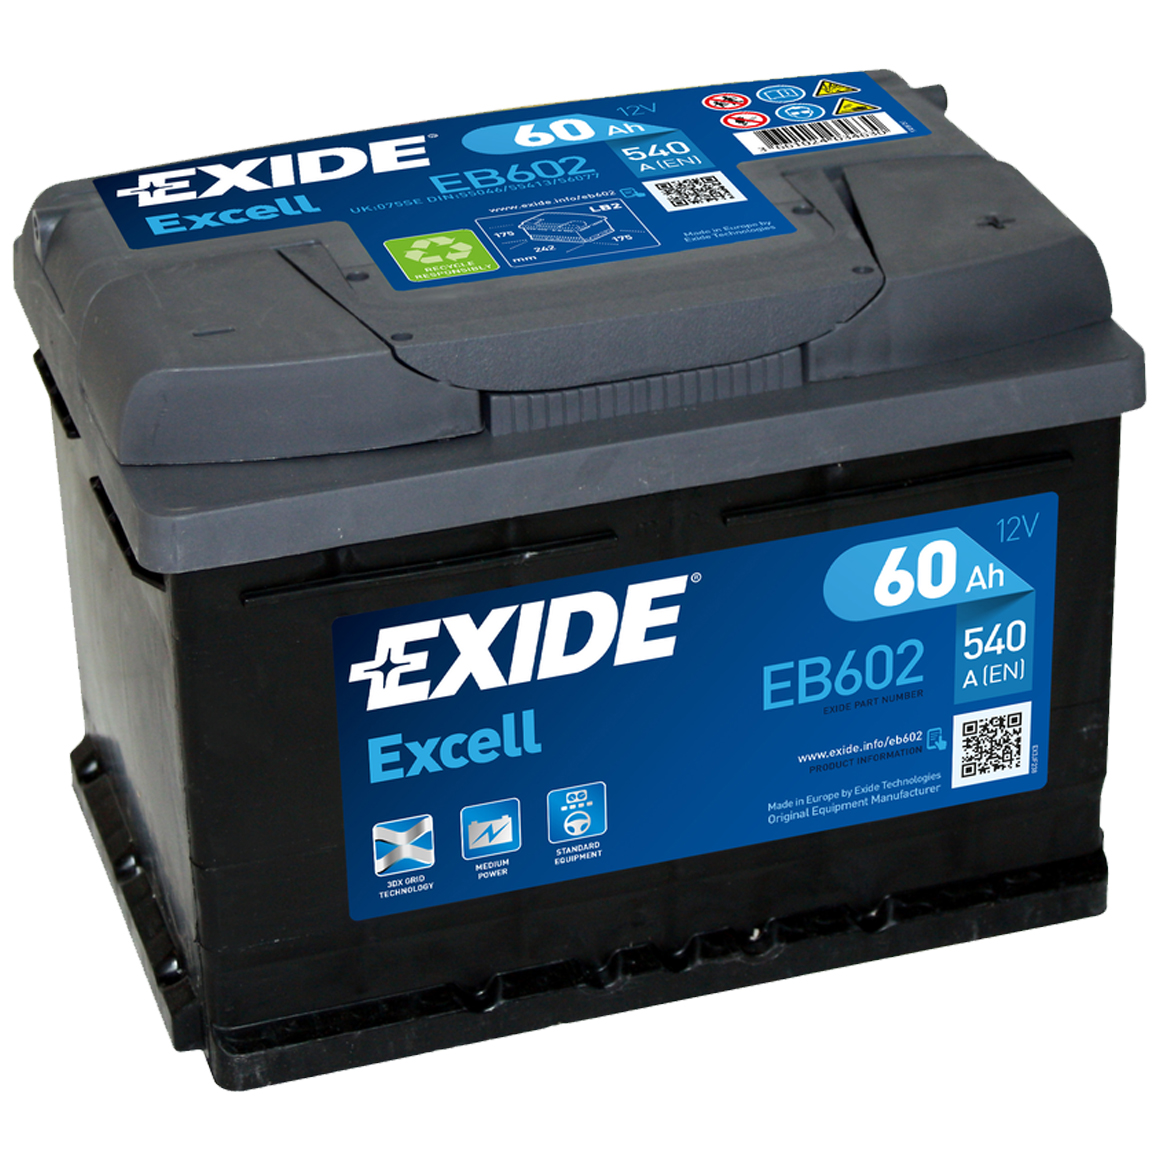 EXIDE EXCELL-EB602 12V-60Ah